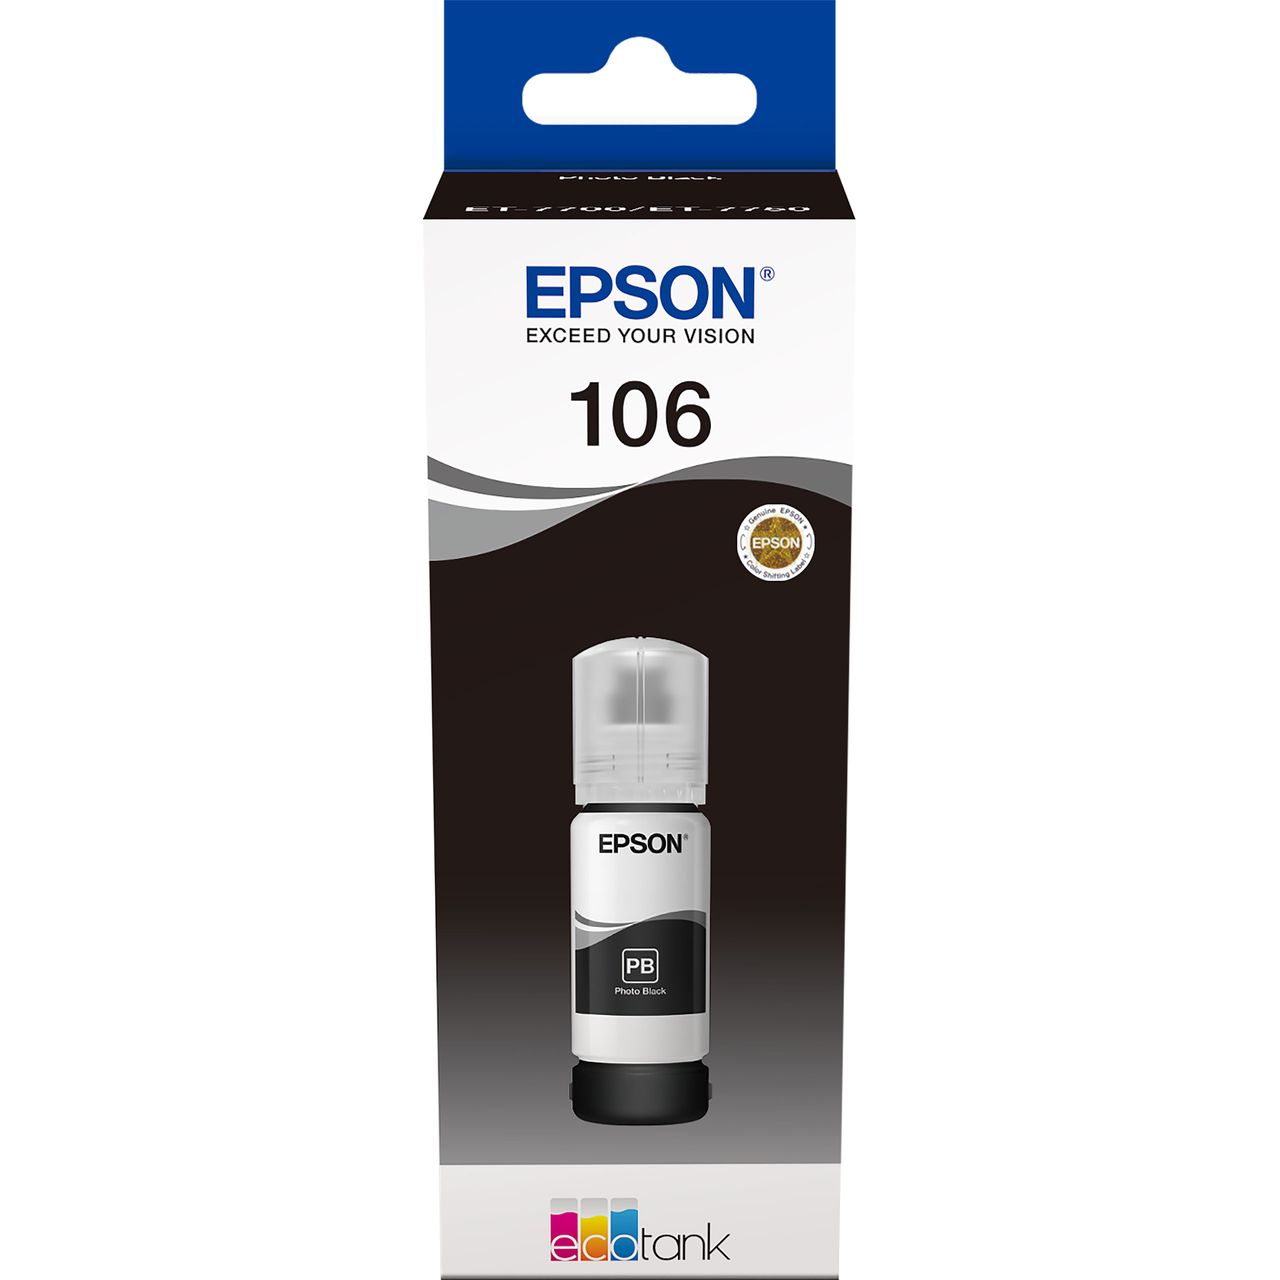 Epson 106 EcoTank Photo Black Ink Bottle Review